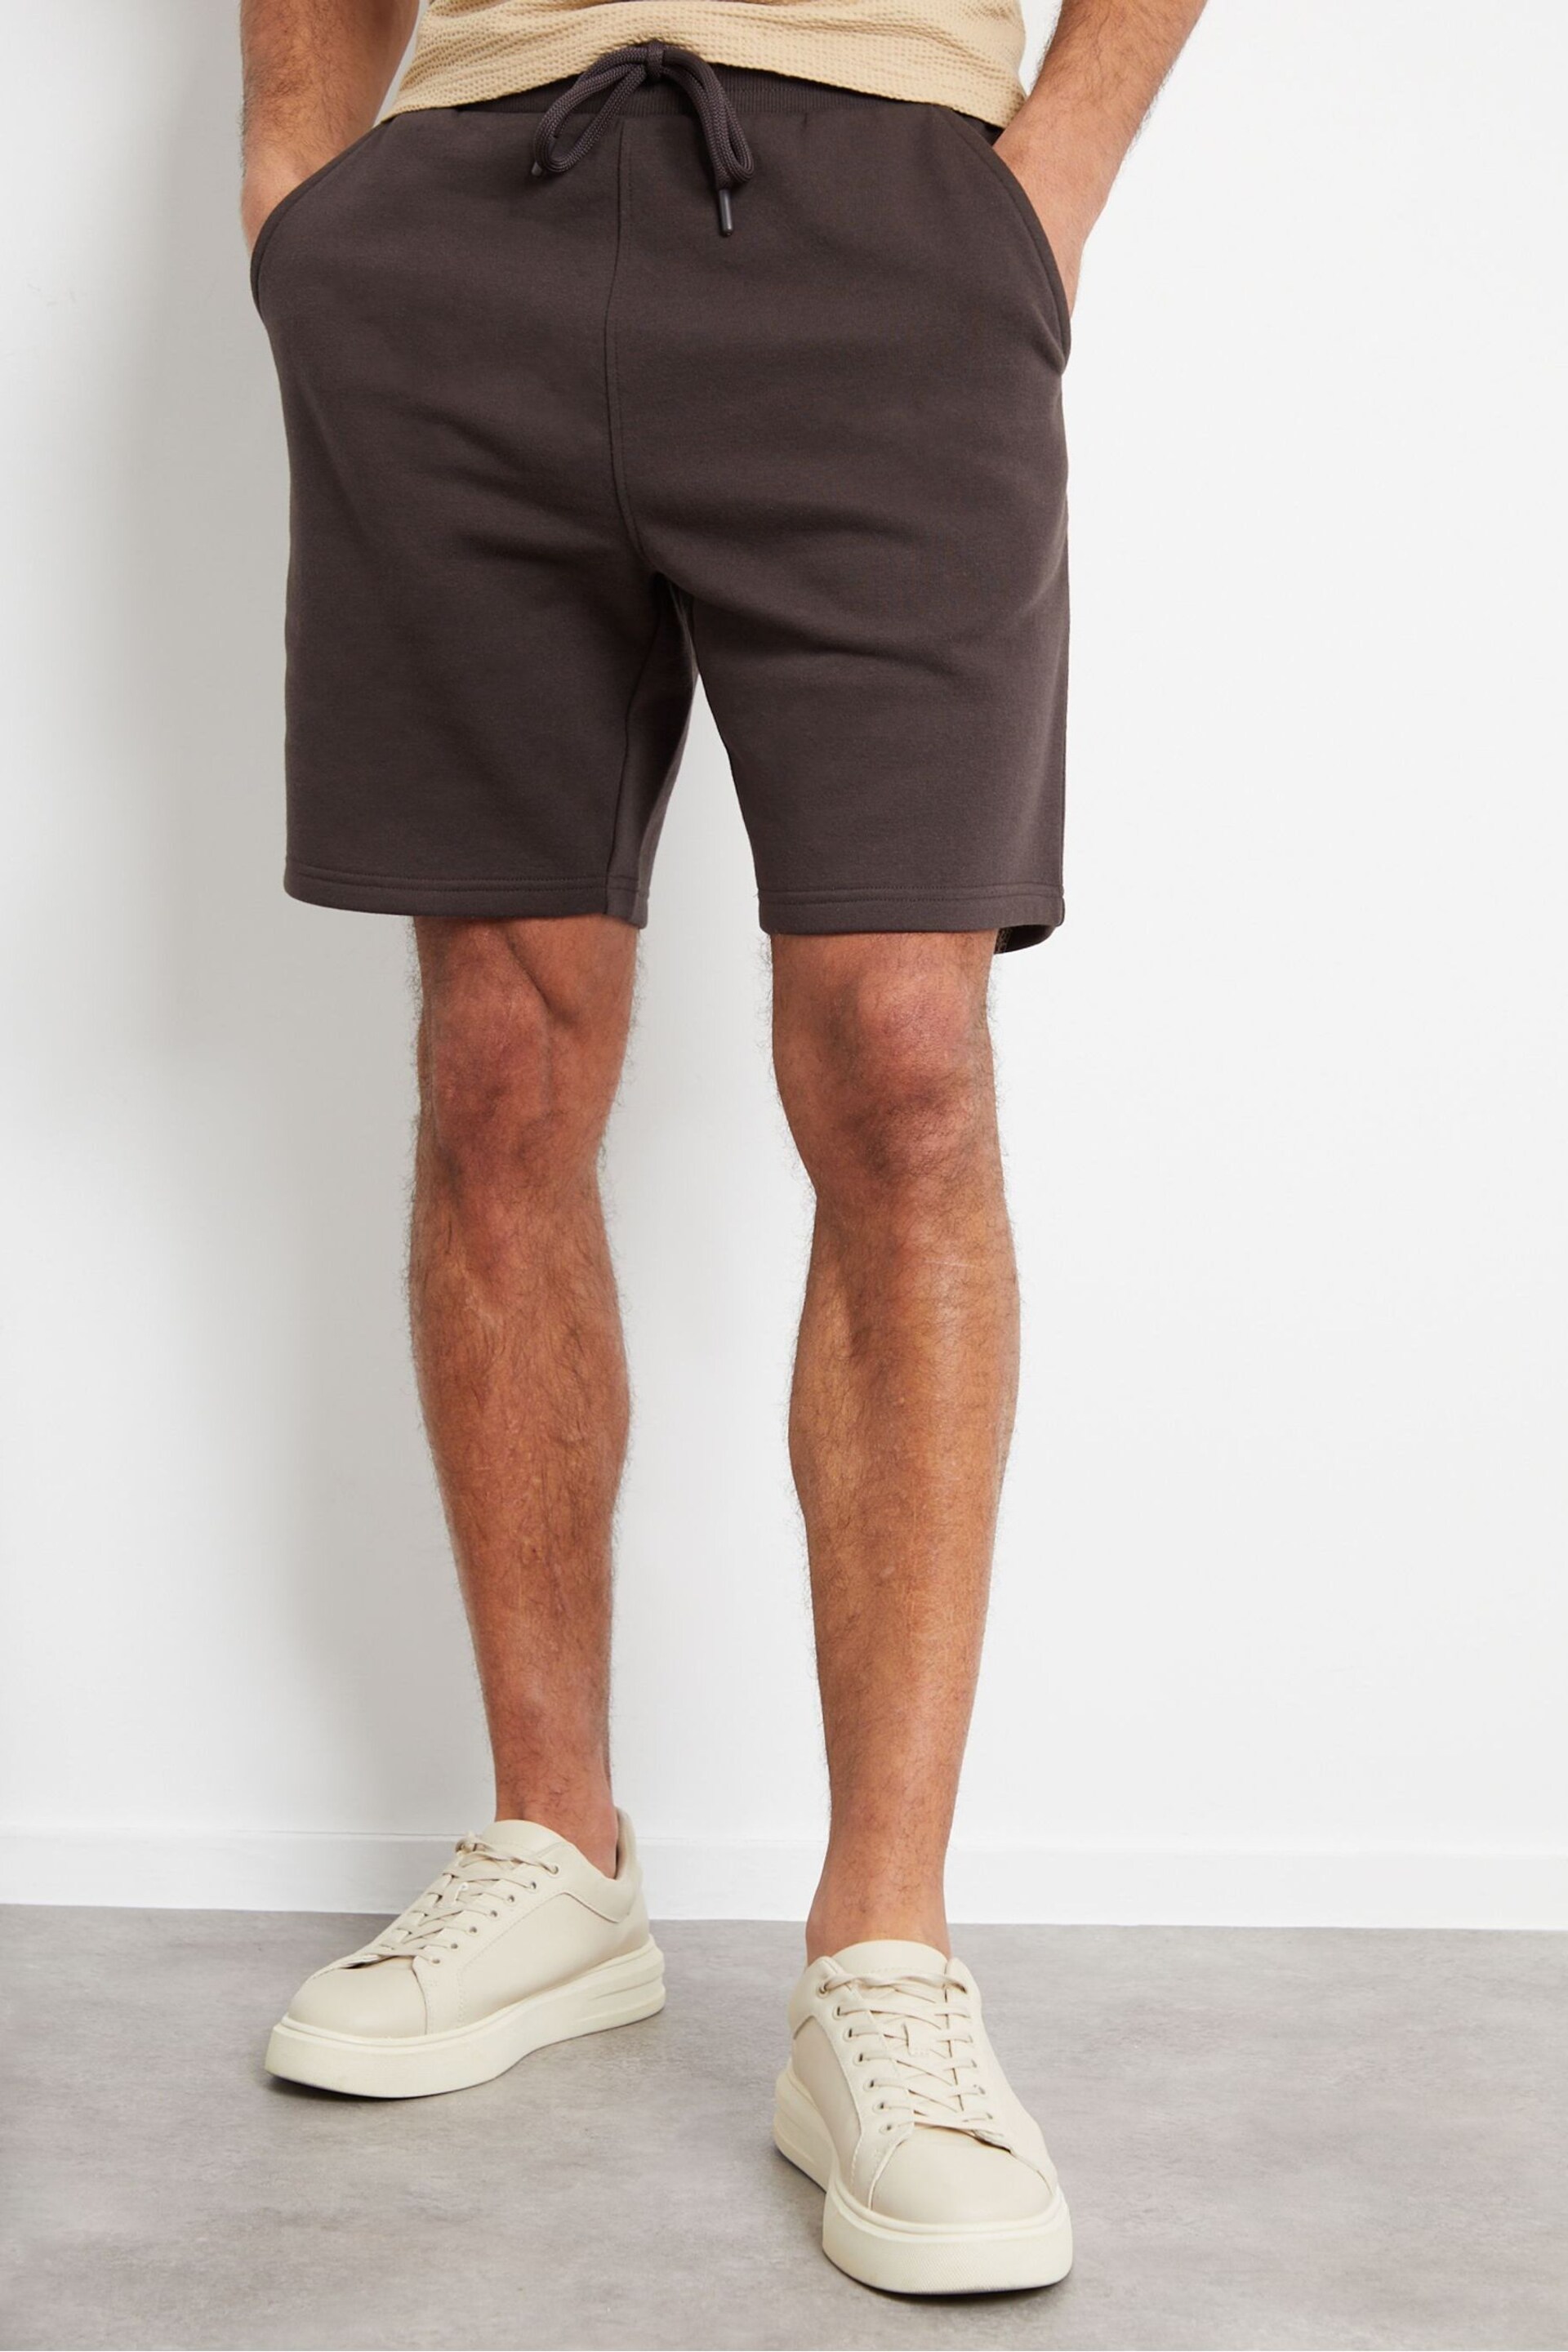 Threadbare Chocolate Basic Fleece Shorts - Image 1 of 4